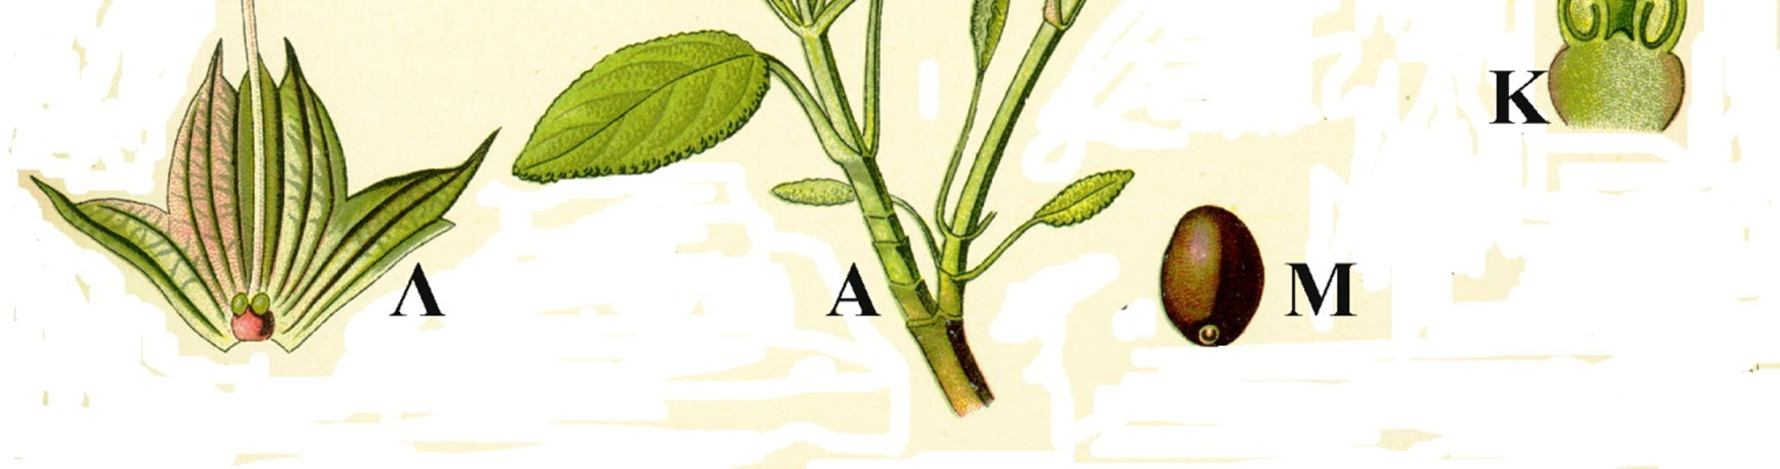 Salvia officinalis: Α: απεικόνιση κλαδιού με φύλλα και άνθη τοποθετημένα κατά σπονδύλους, Γ: Λεπτομέρεια κορυφής στήμονα με άρθρωση, Δ: το ίδιο από αντίθετη πλευρά, Ε: τομή στεφάνης, διακρίνονται οι